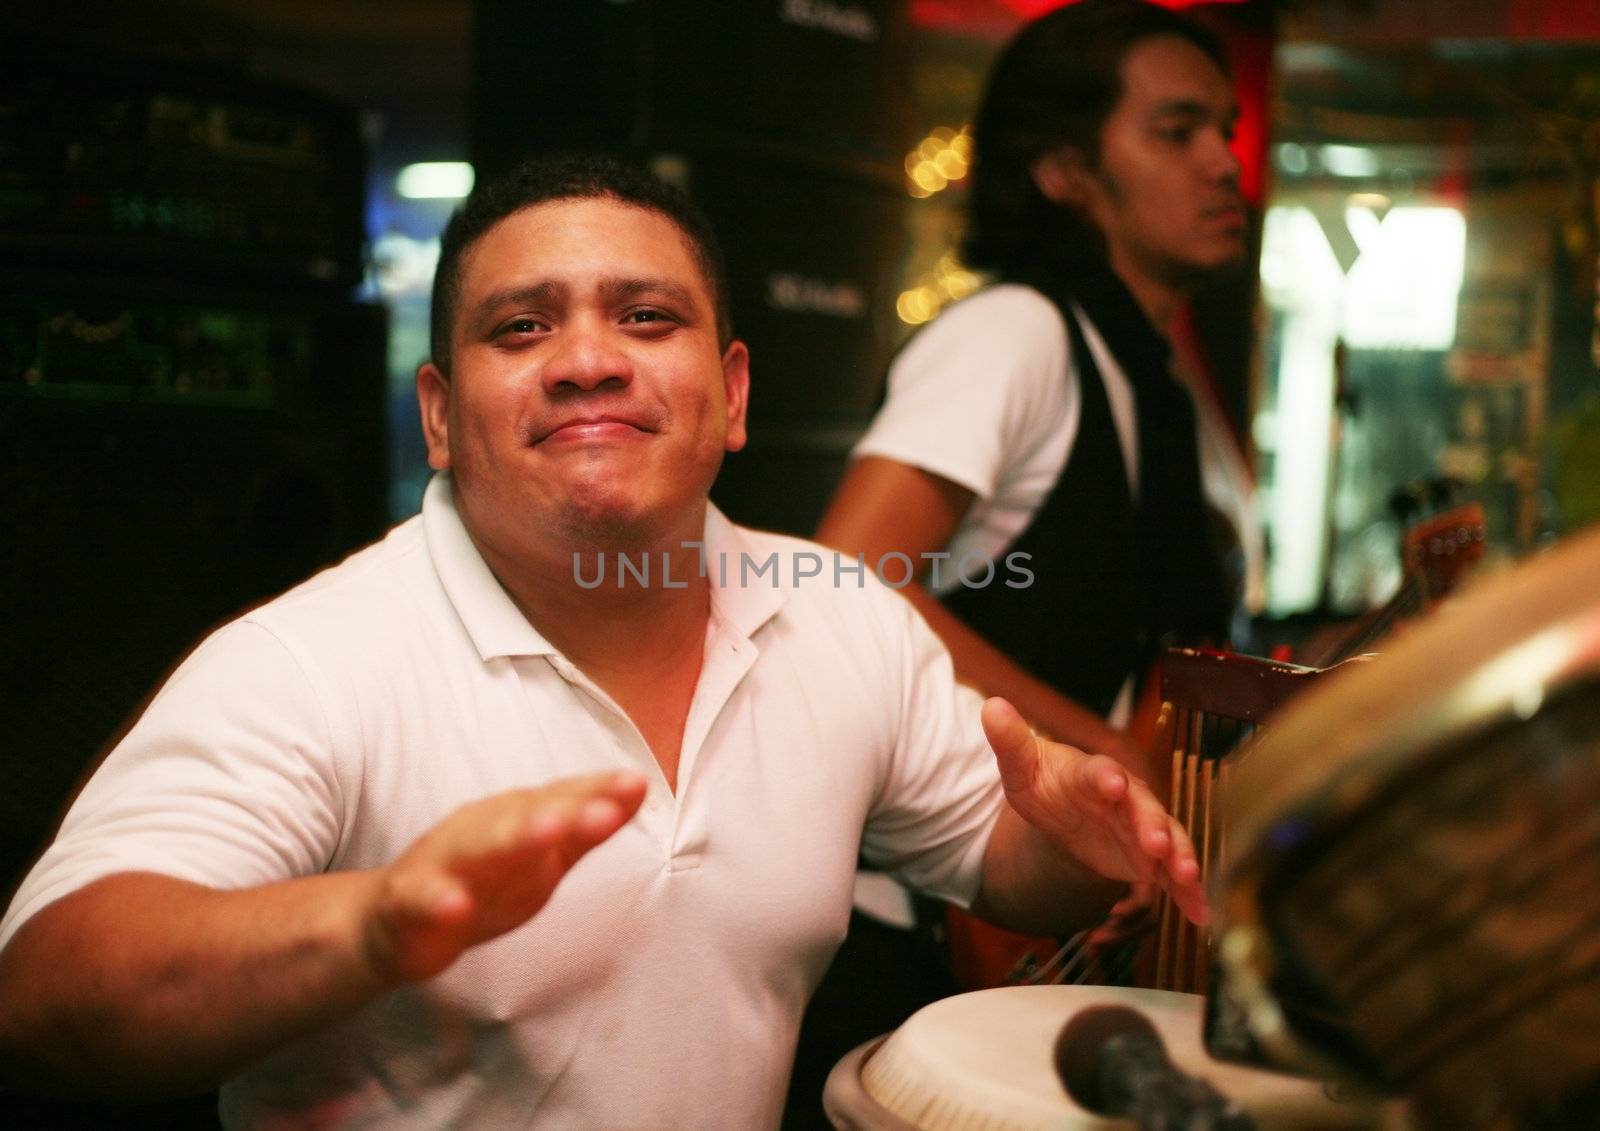 Smiling musician at an alive concert in a night club "La vida loka". Bali. Indonesia